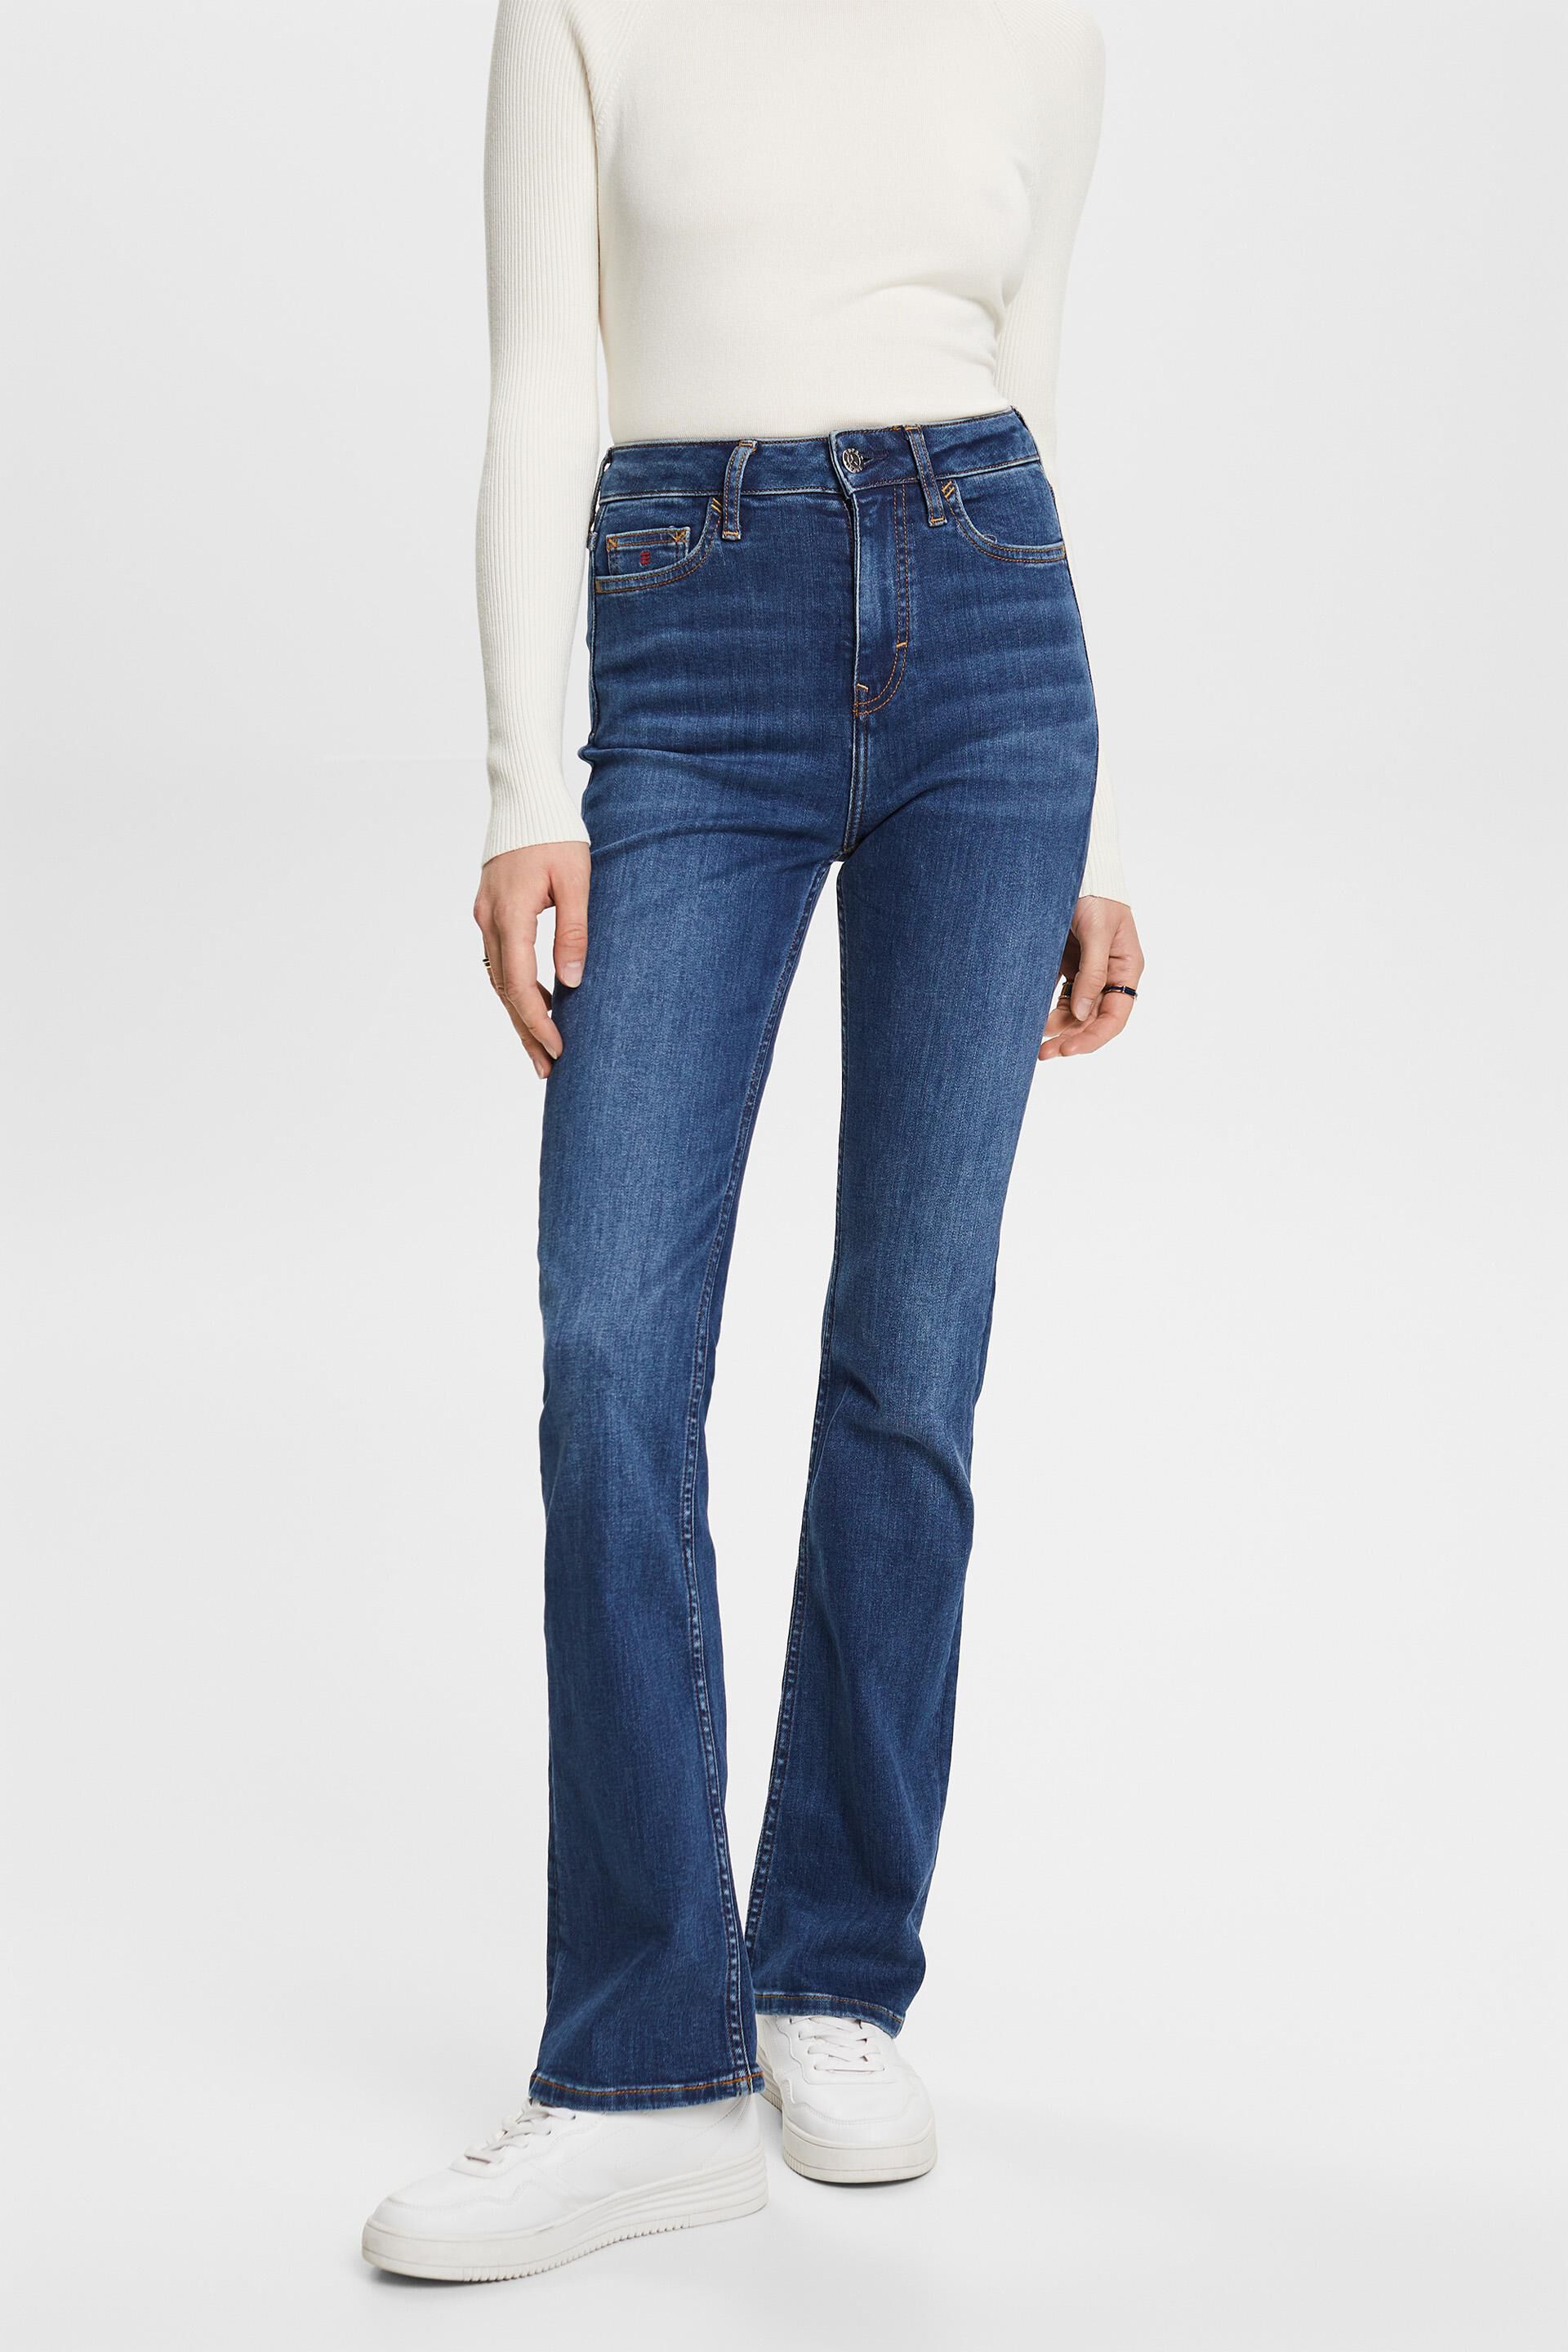 Esprit Premium jeans high-rise bootcut